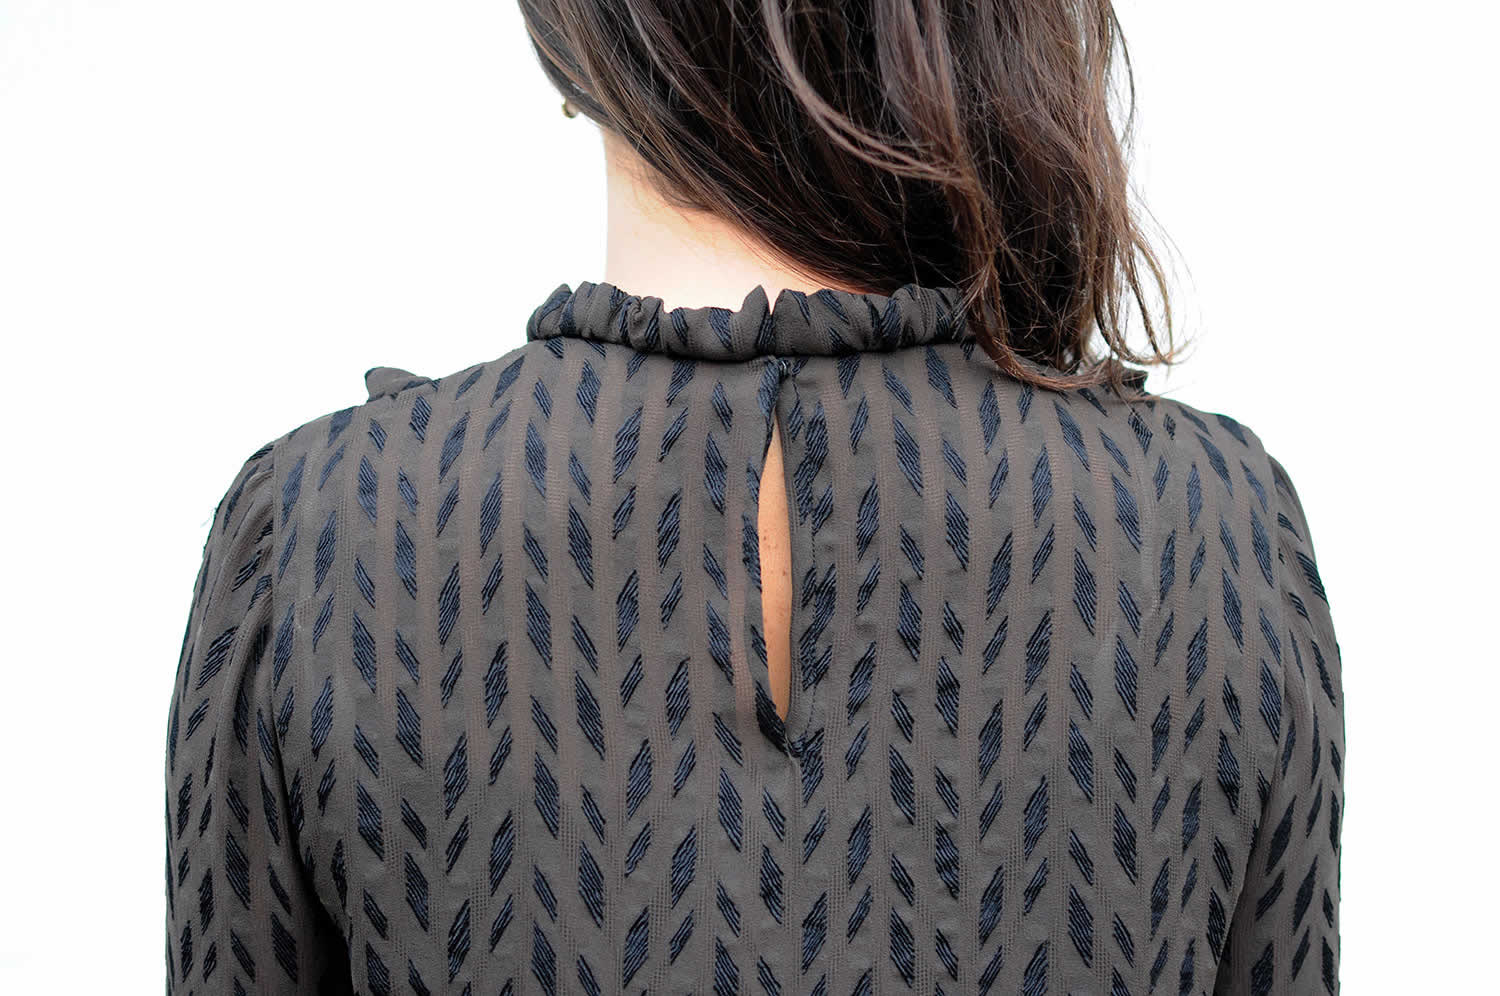 Ladulsatina - Sewing blog - Blog di cucito - Jolanda blusa by Atelier Vicolo n 6 in silk viscose blend - Back details